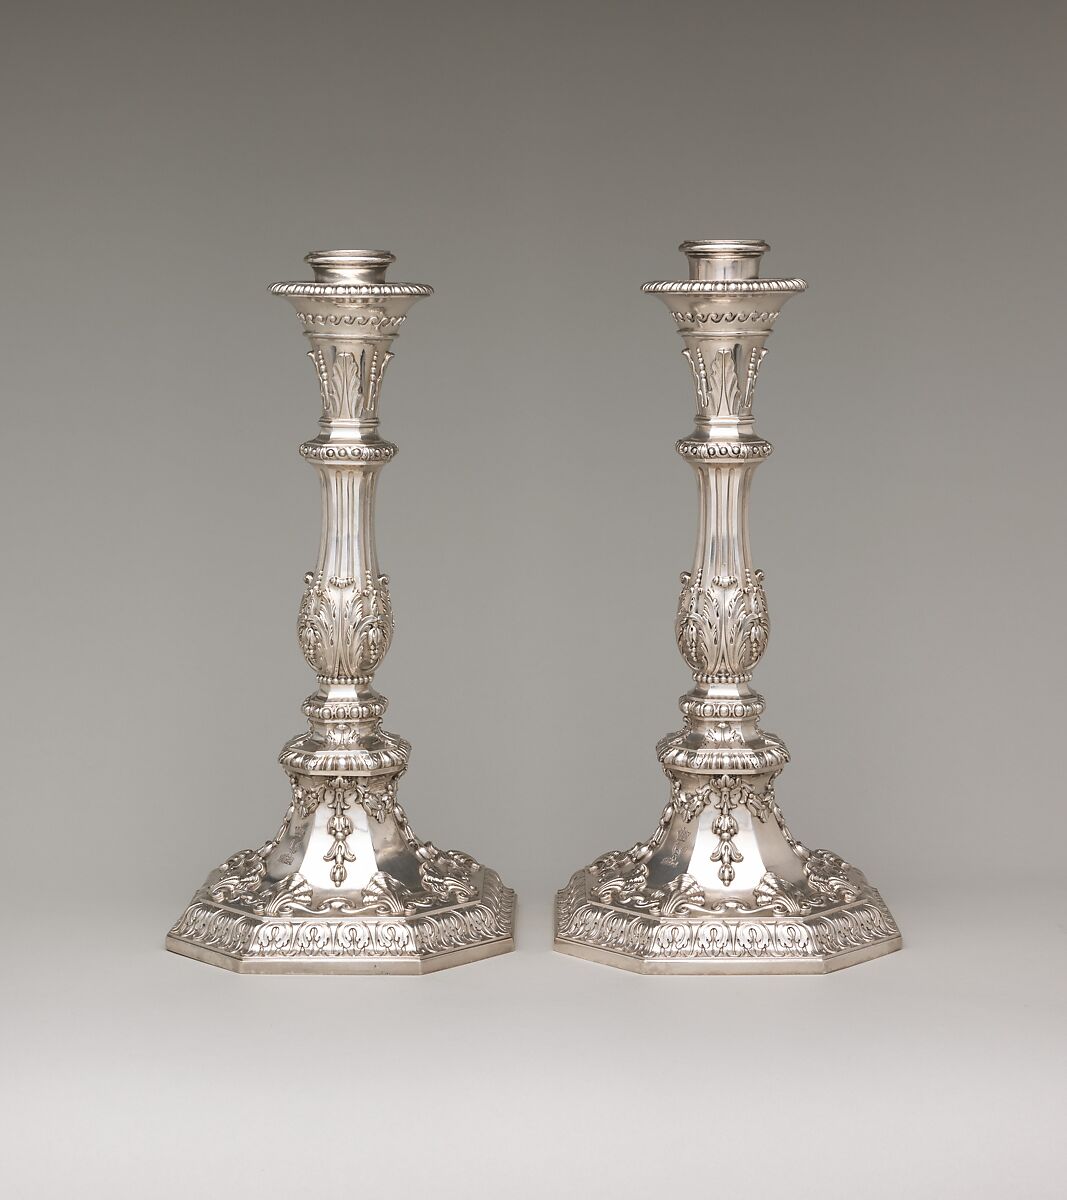 Pair of candlesticks, Edward Wakelin (British, active before 1748, died 1784), Silver, British, London 